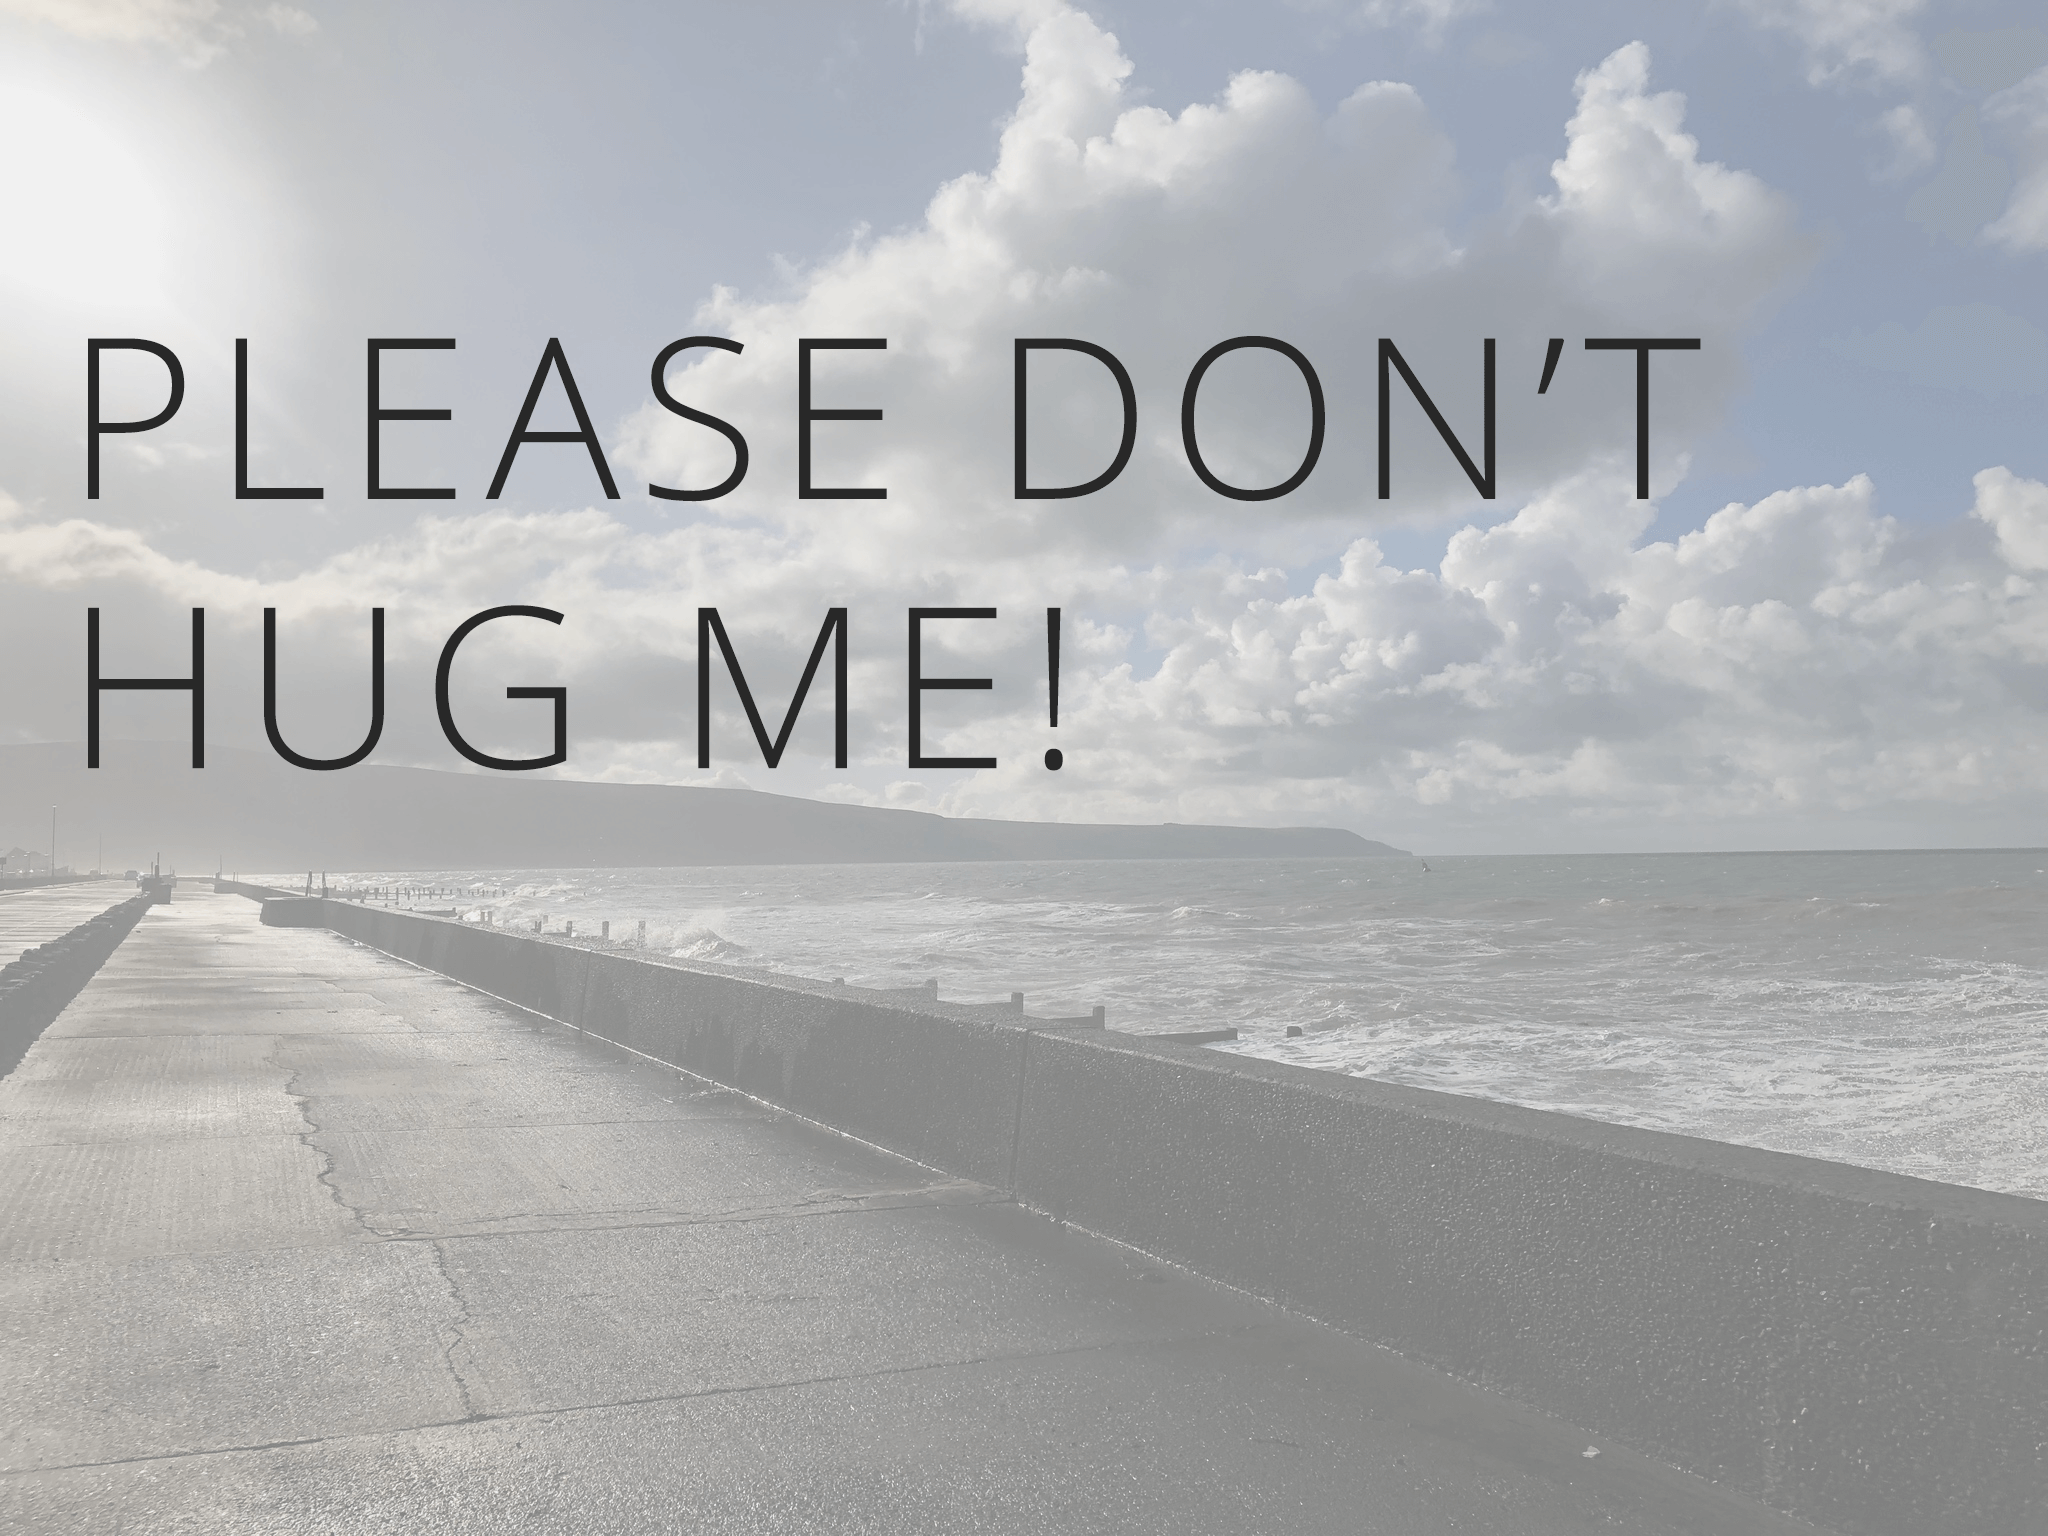 Please don’t hug me